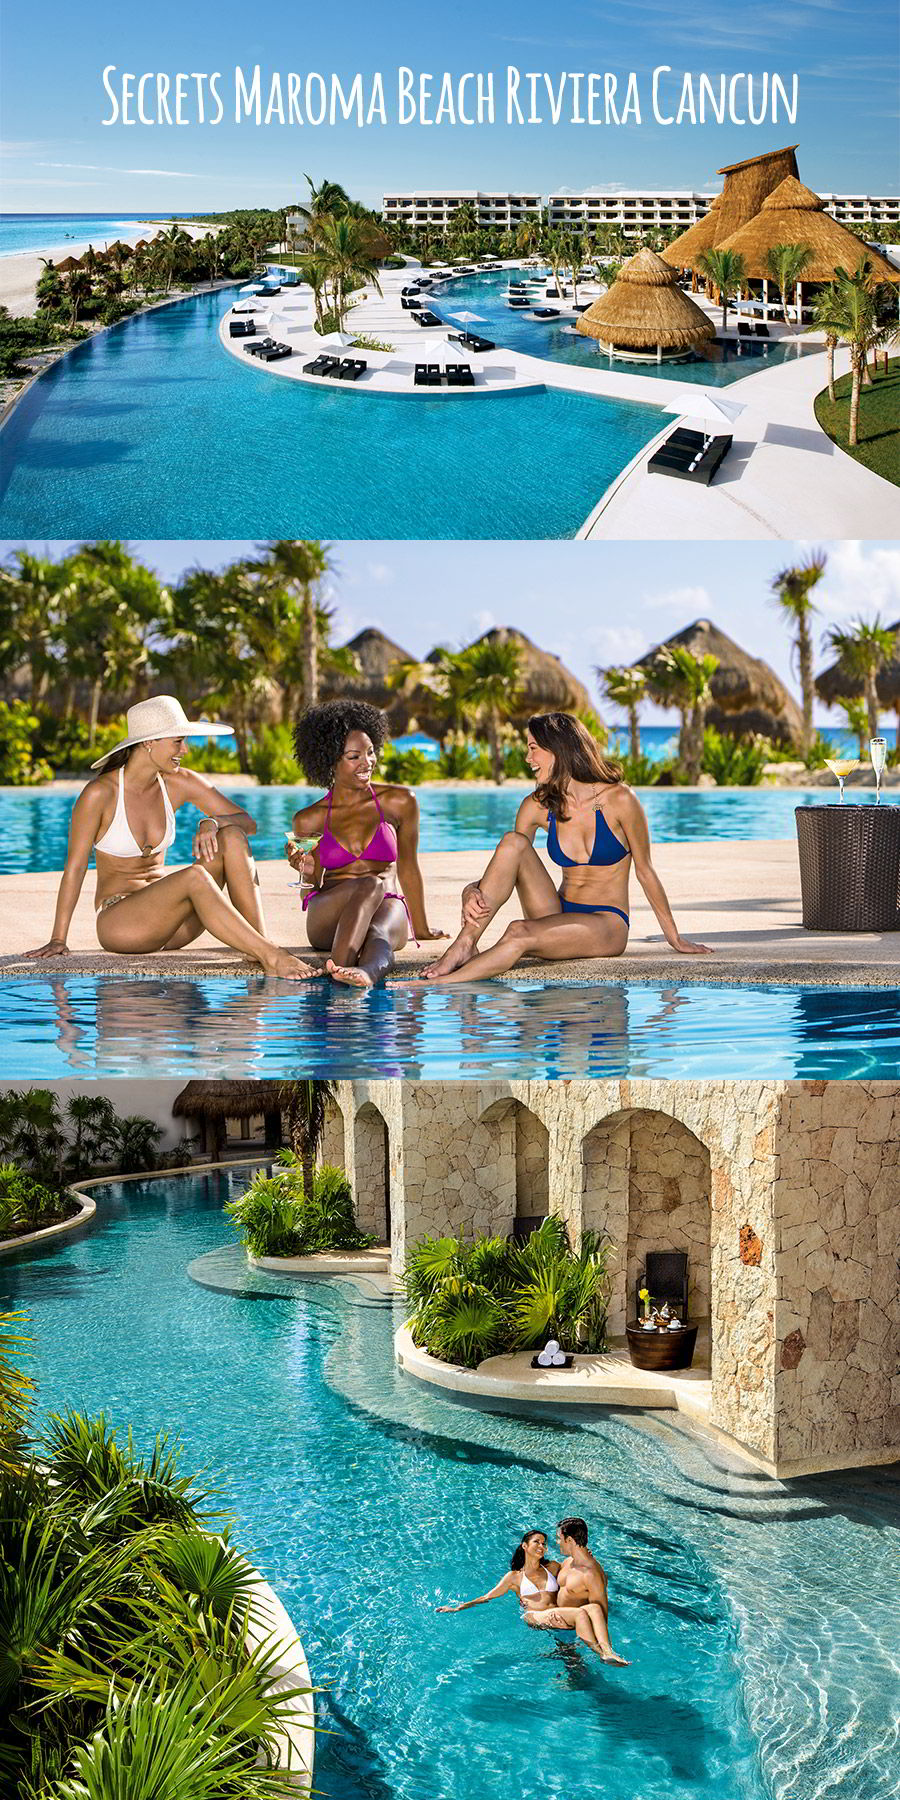 secrets resorts maroma beach riviera cancun mexico destination wedding venue honeymoon luxury resort beach pool side swim out suites